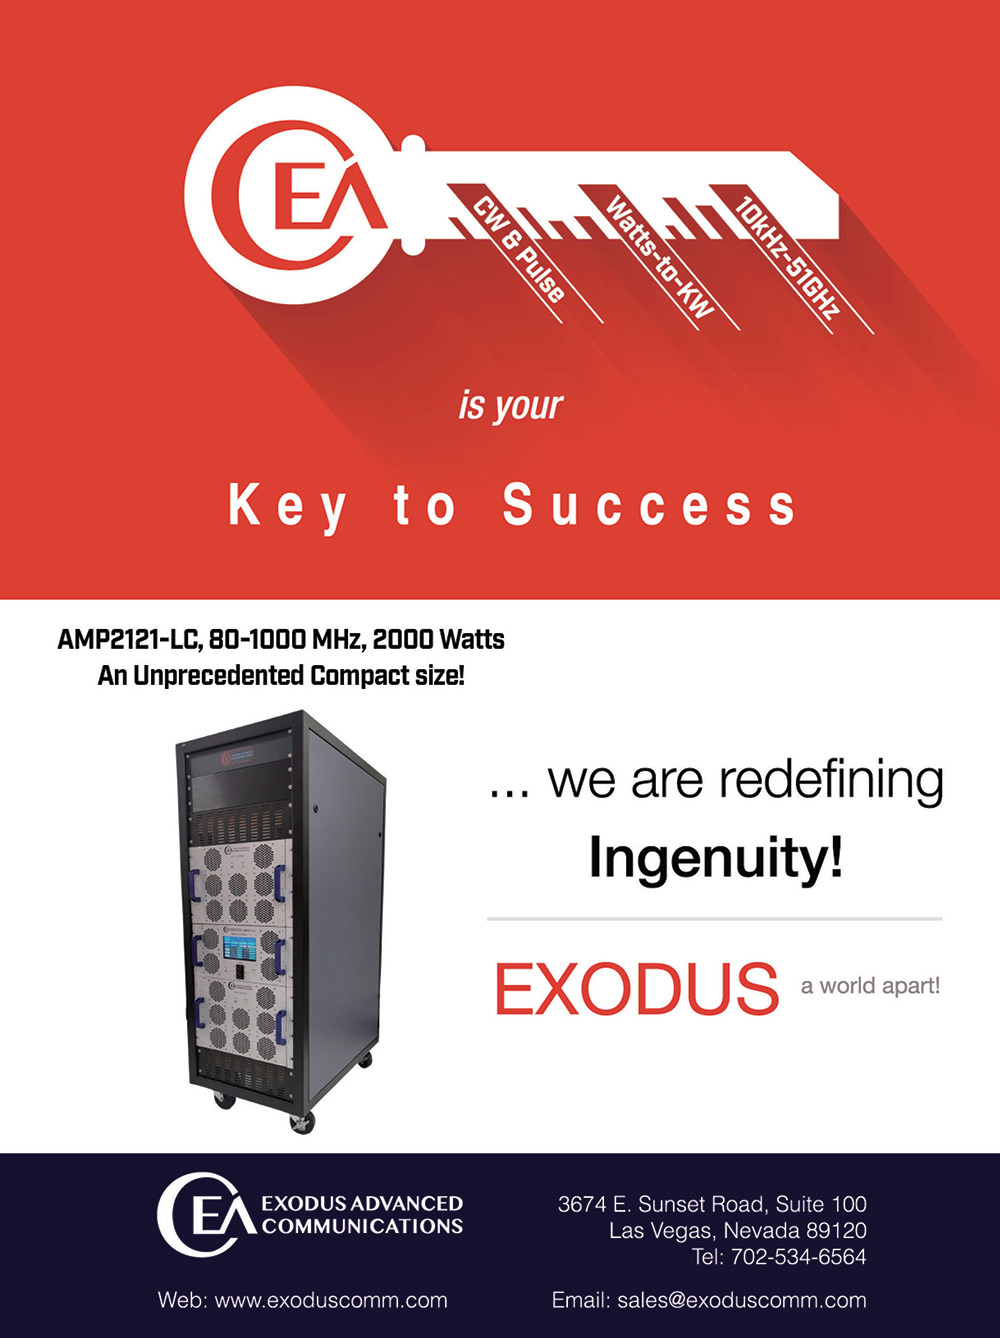 Exodus Advanced Communications Advertisement